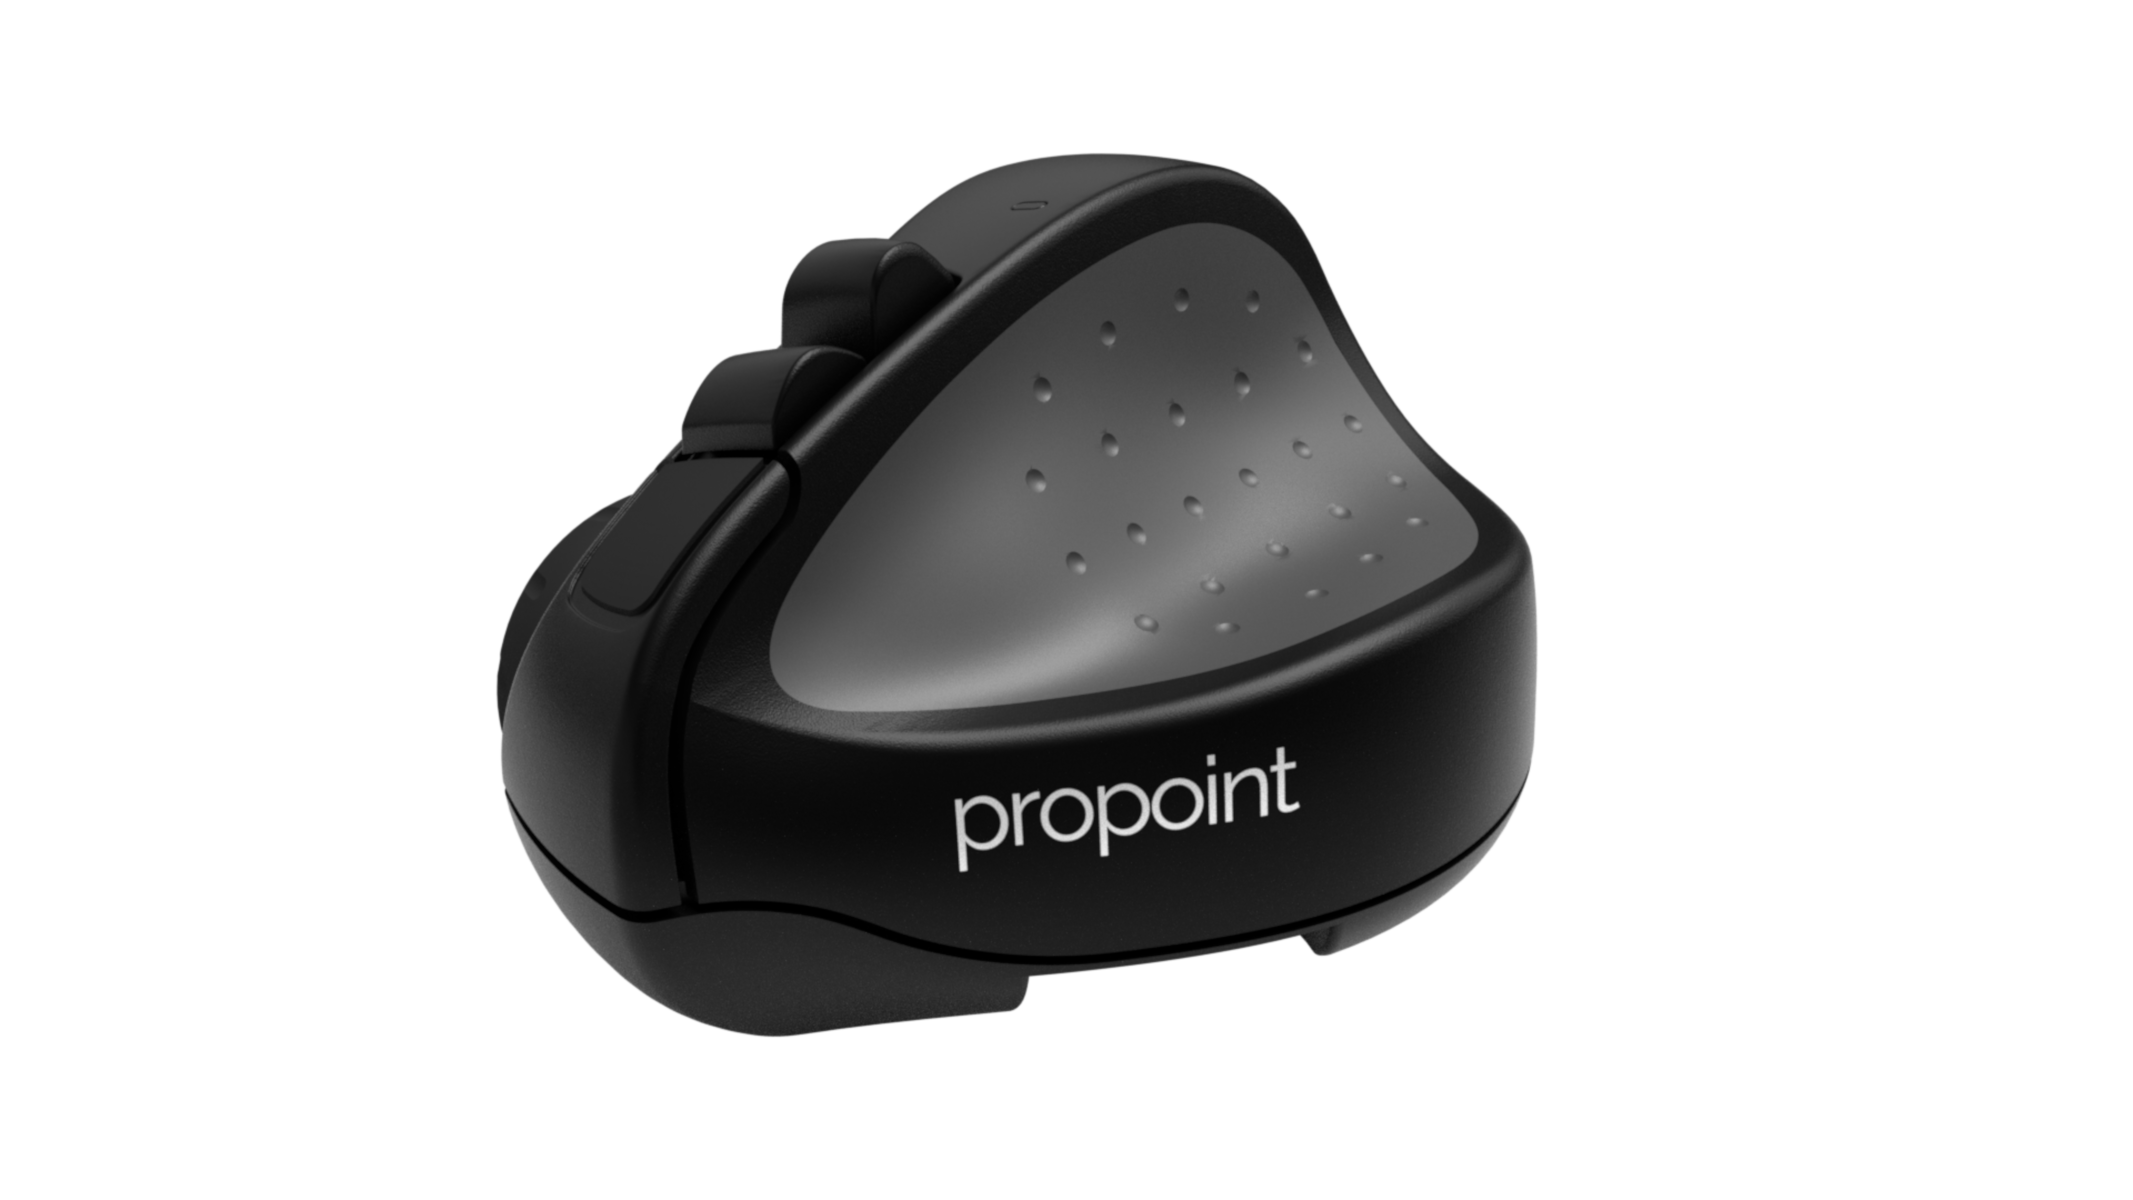 SWIFTPOINT SM600-S Pro Point Wireless Maus, schwarz